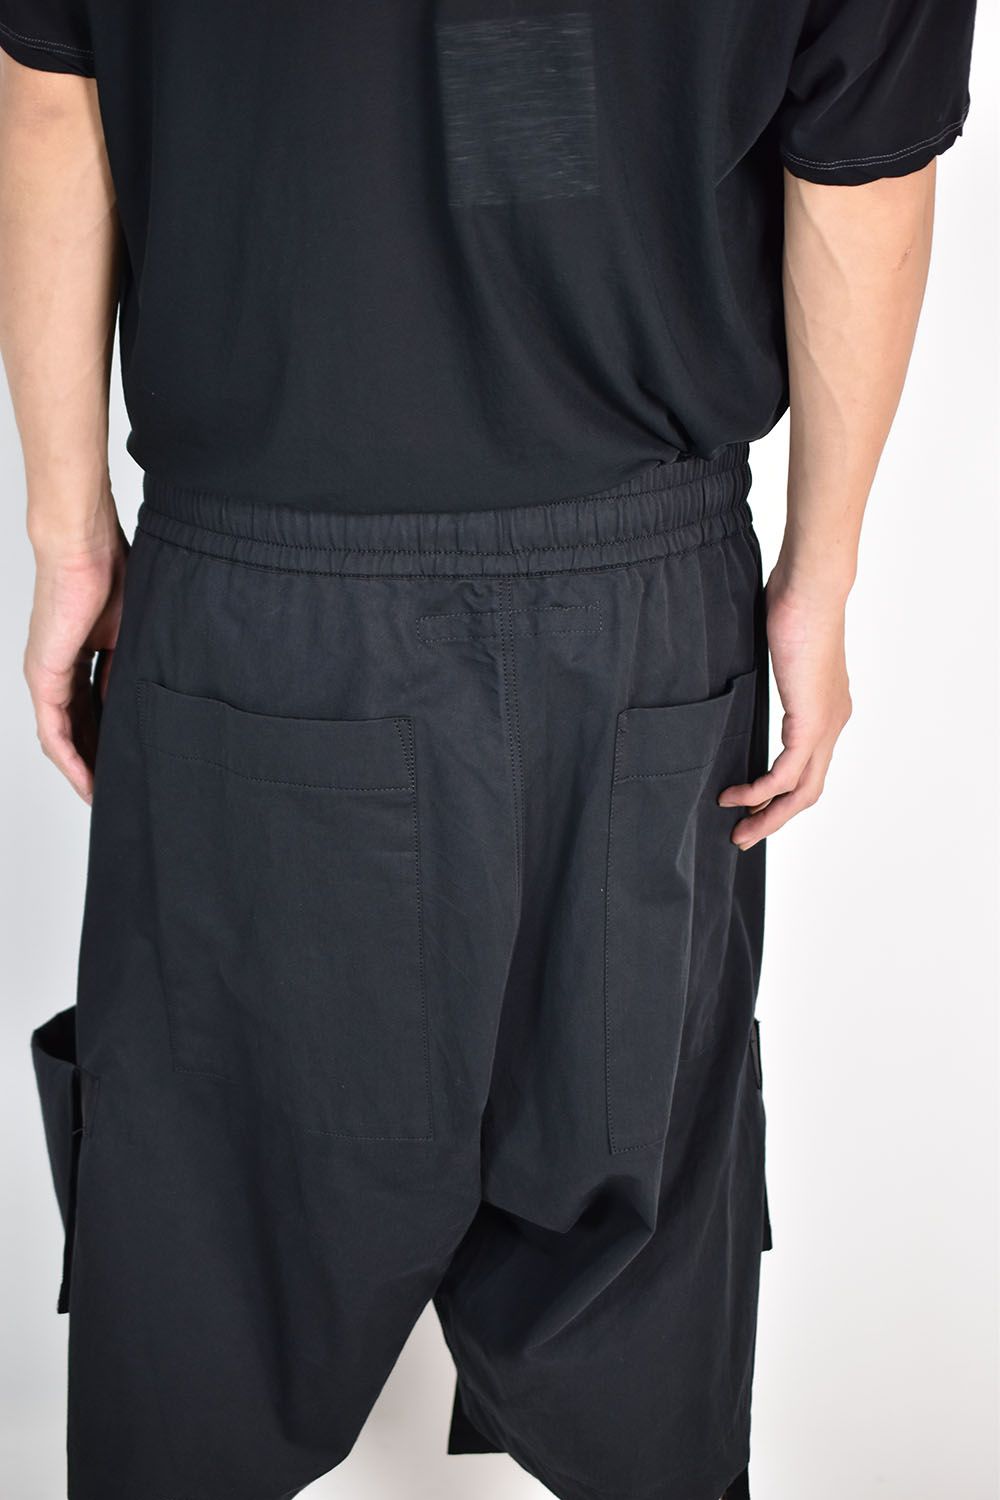 Side Pocket Shorts"Black"/ サイドポケットショーツ"ブラック"